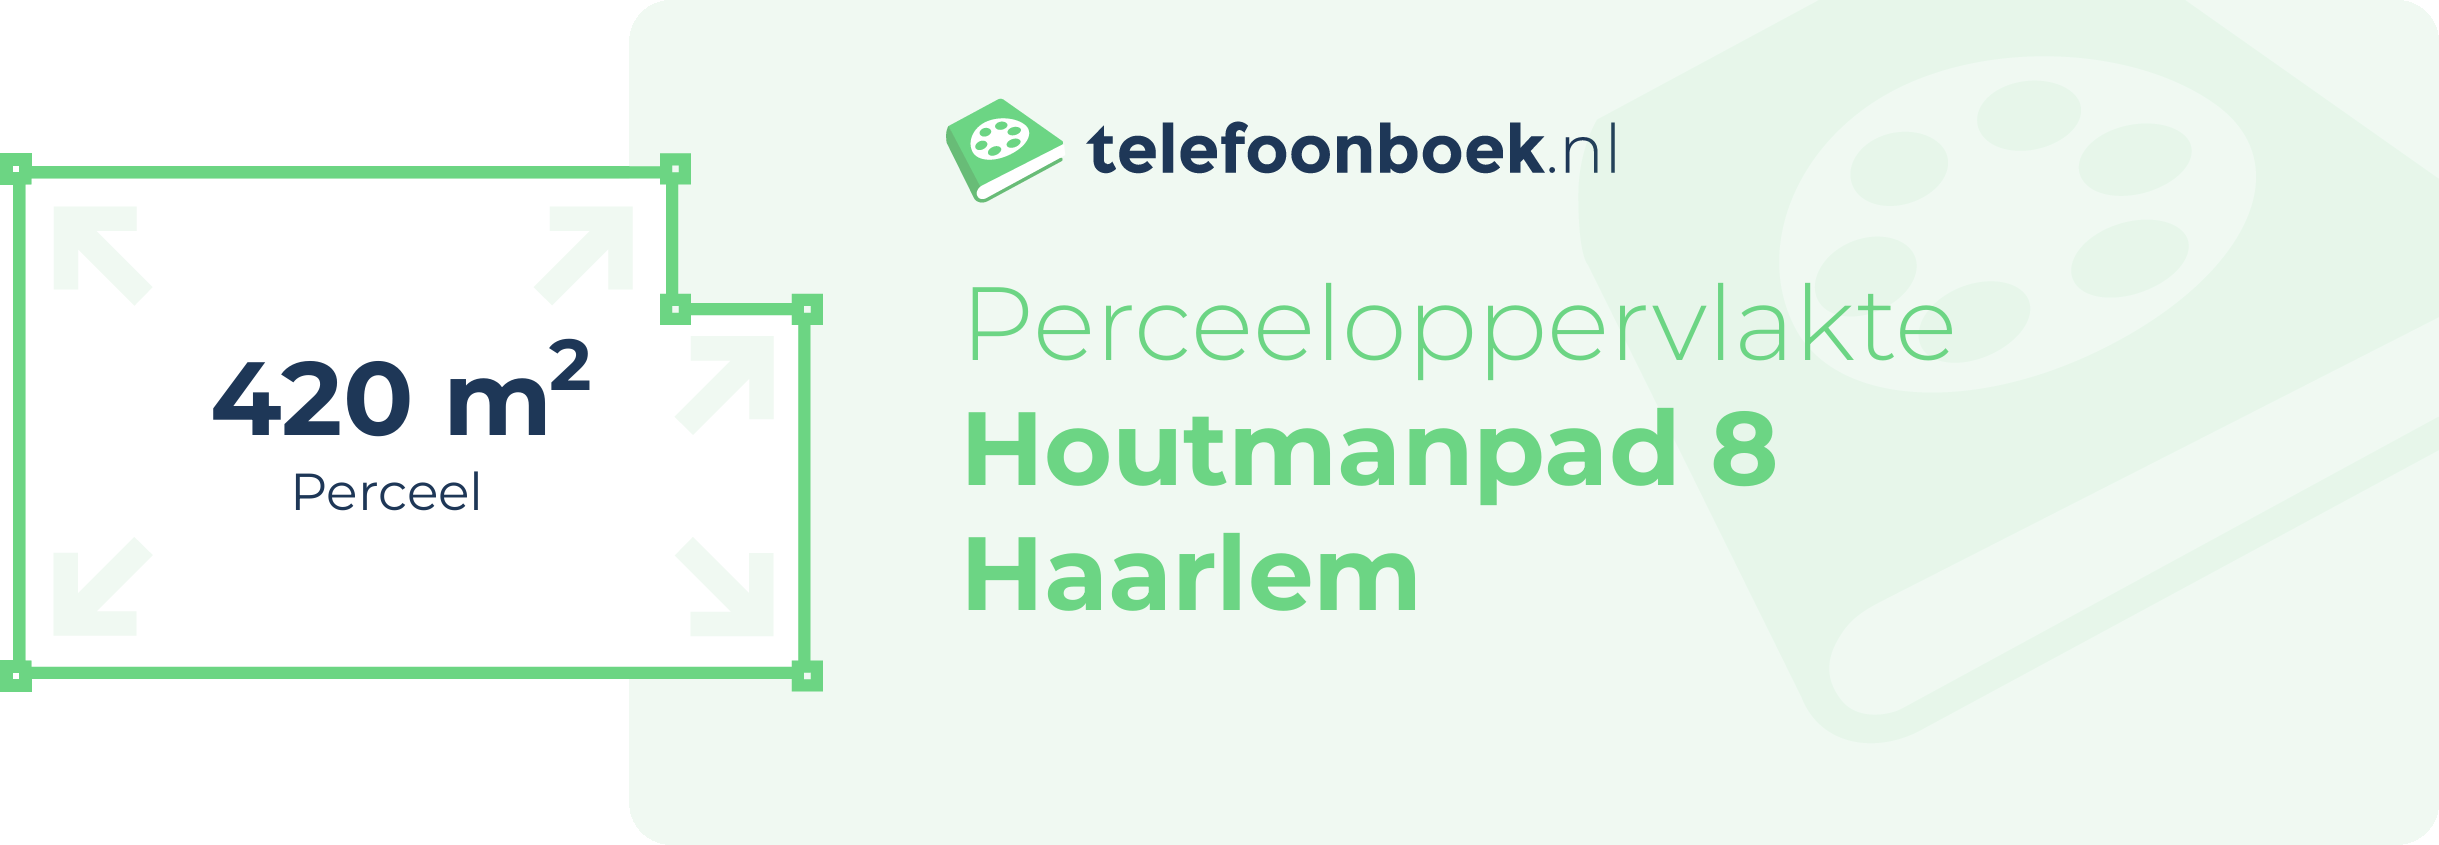 Perceeloppervlakte Houtmanpad 8 Haarlem